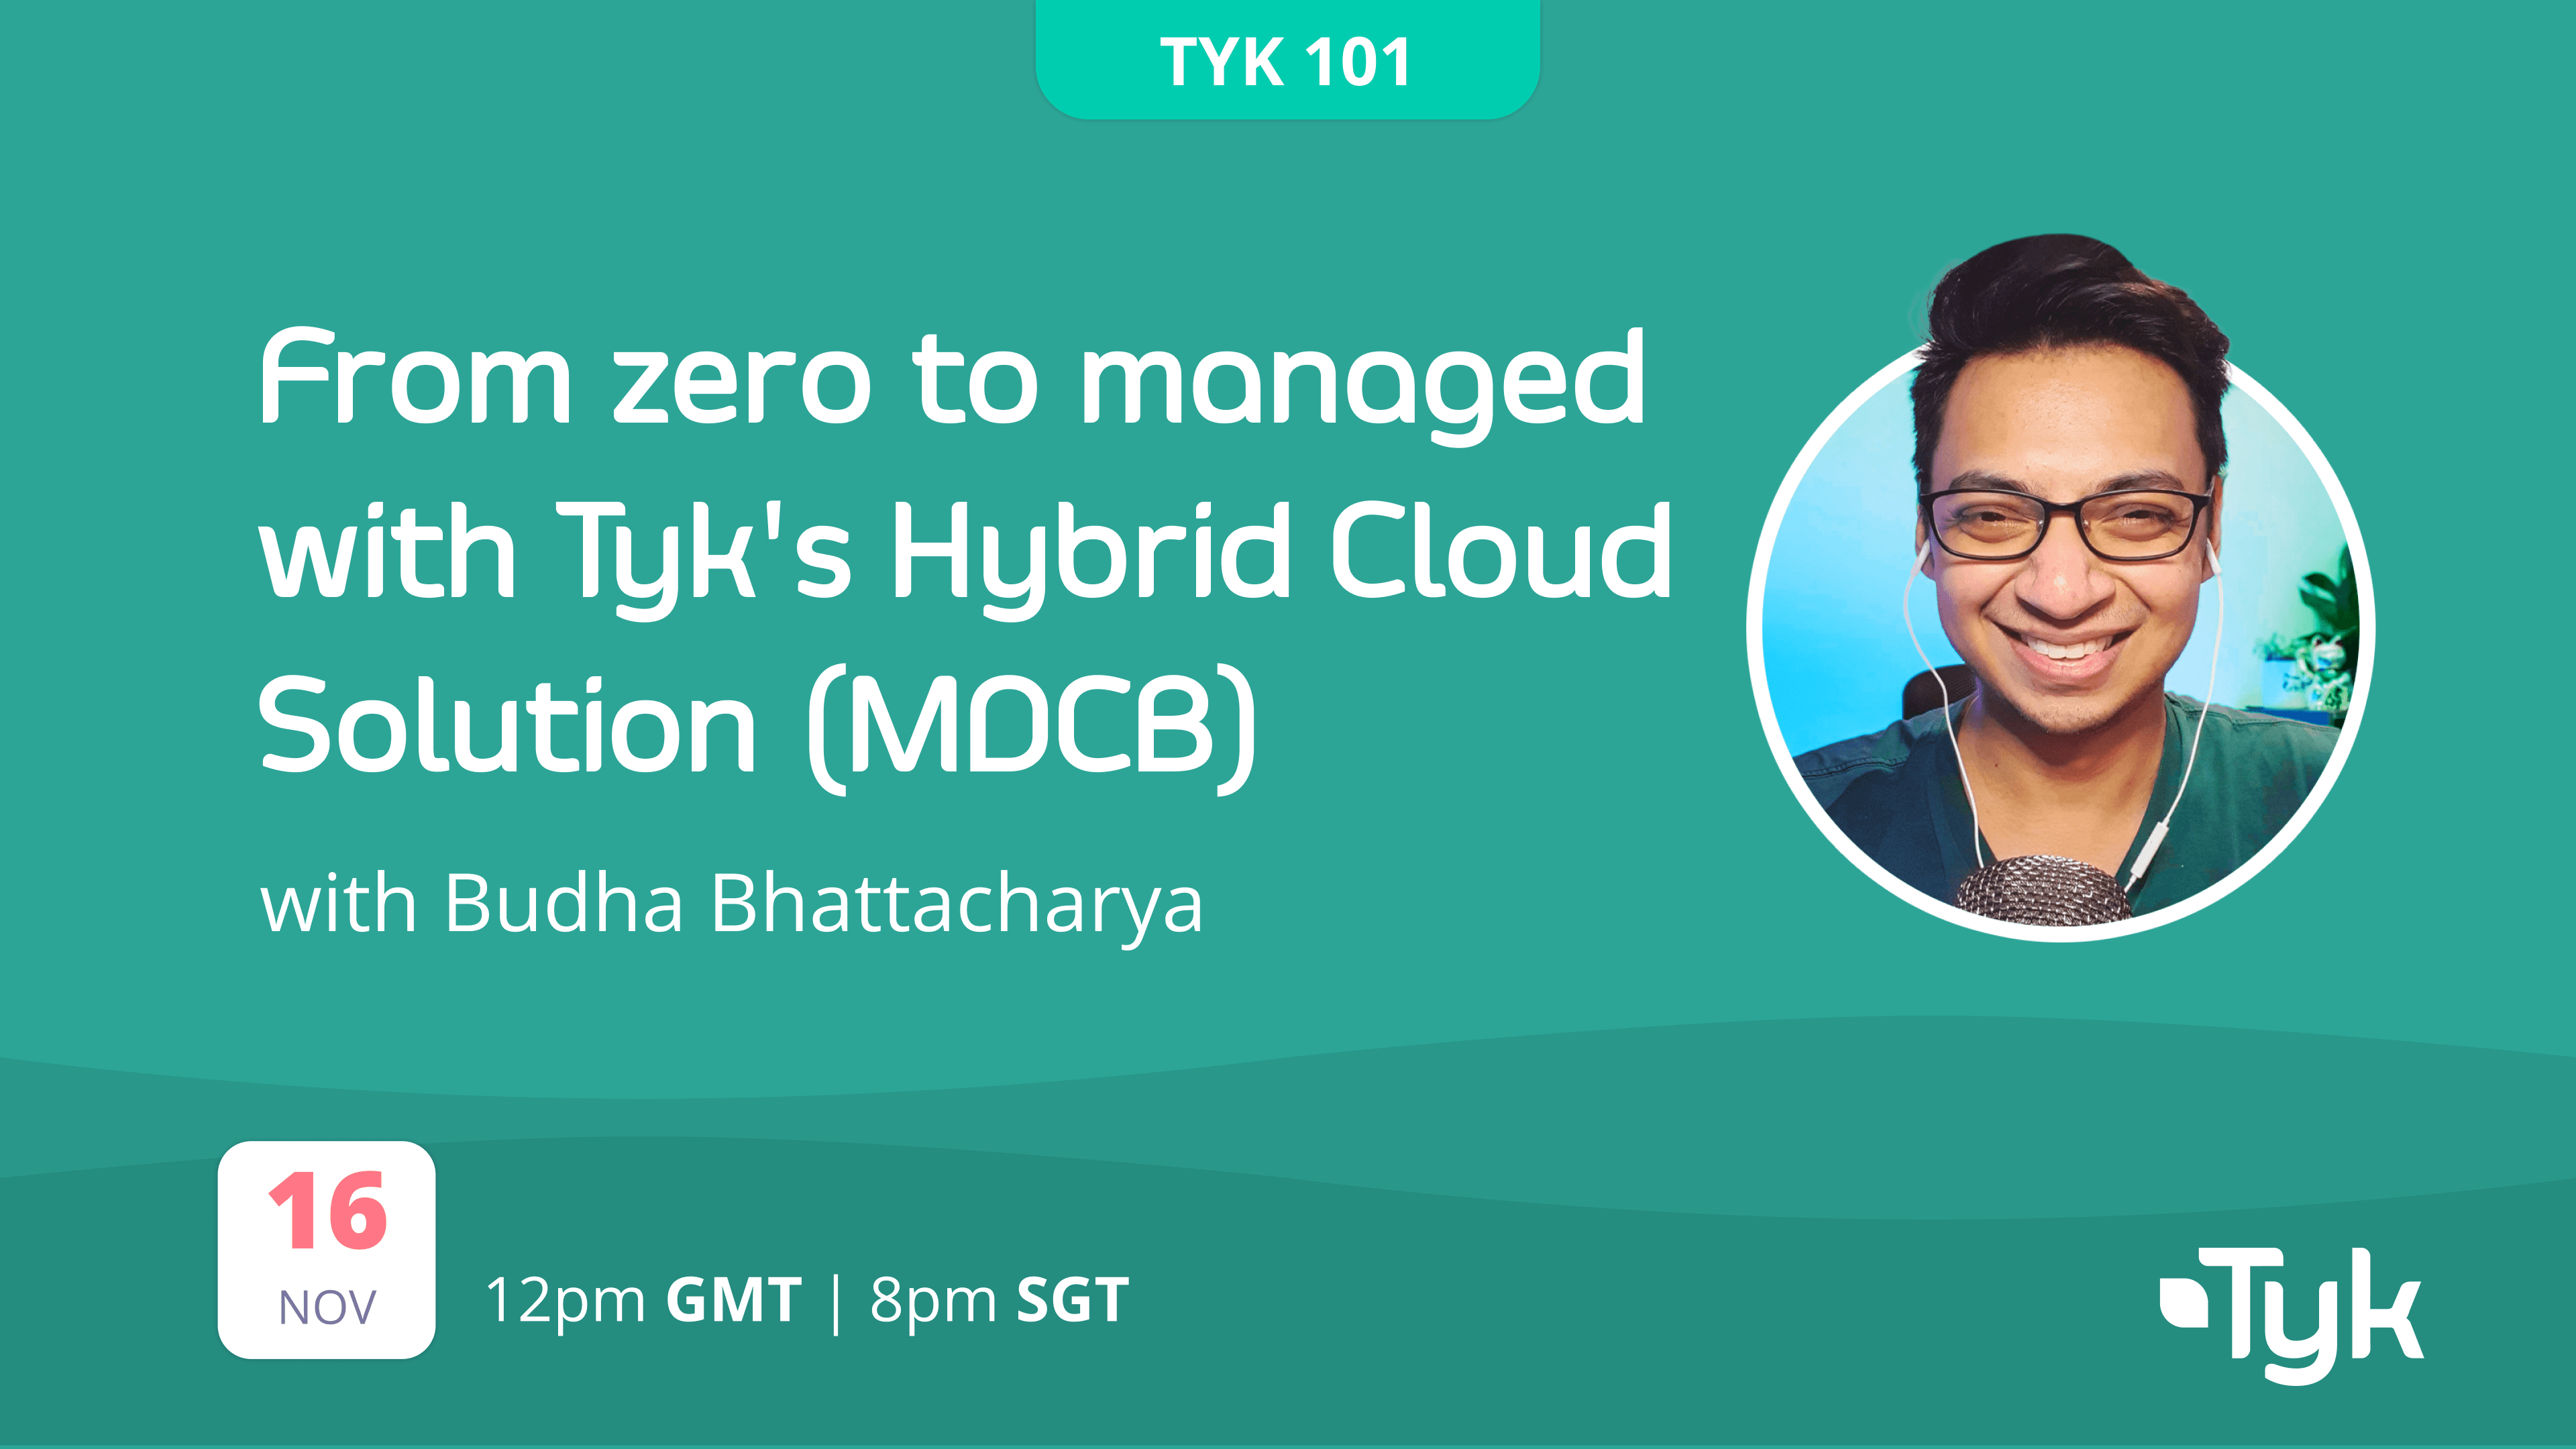 Tyk101 - Tyk Hybrid cloud solution